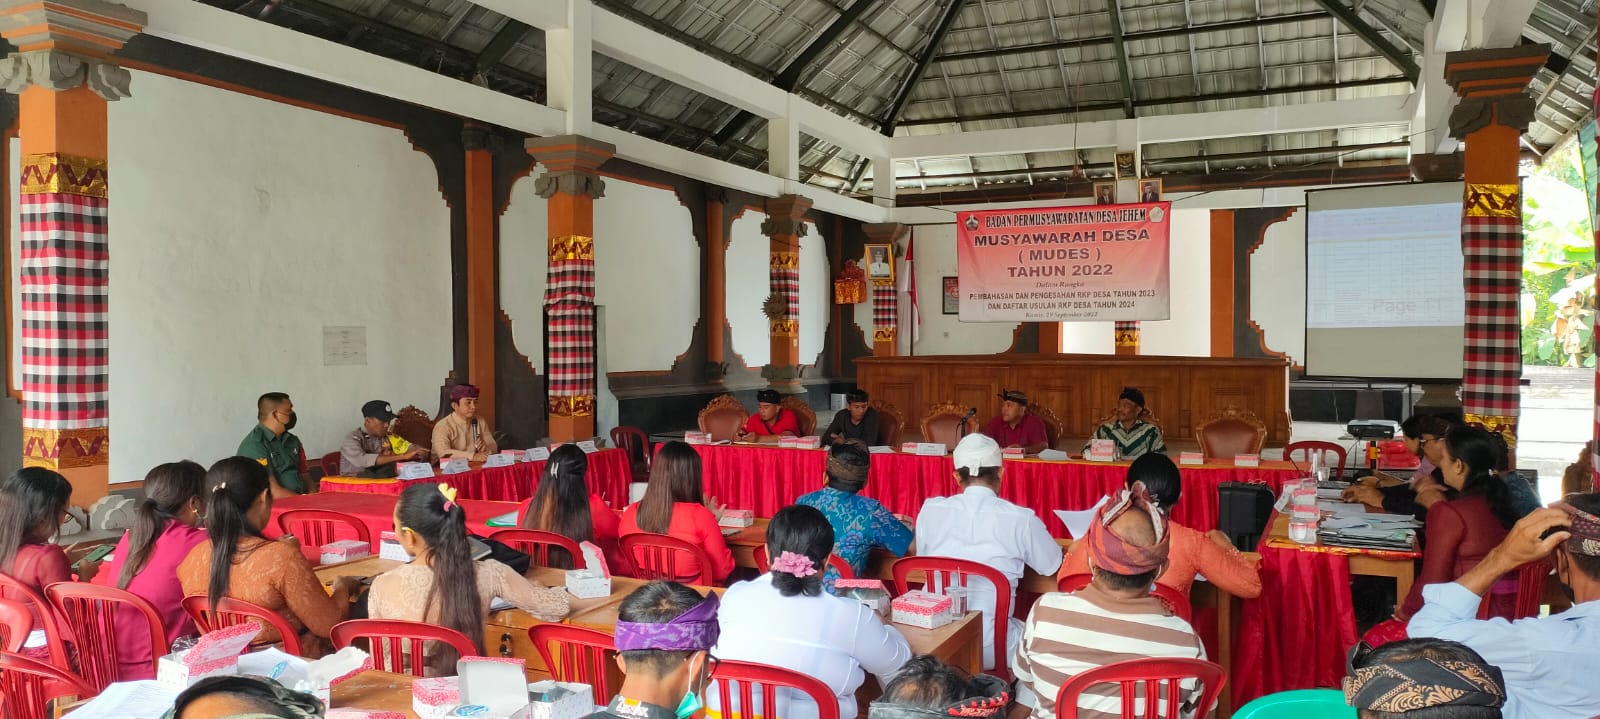 Musyawarah Desa Tahun 2022 dalam Rangka Pembahasan dan Pengesahan RKP Th.2023 